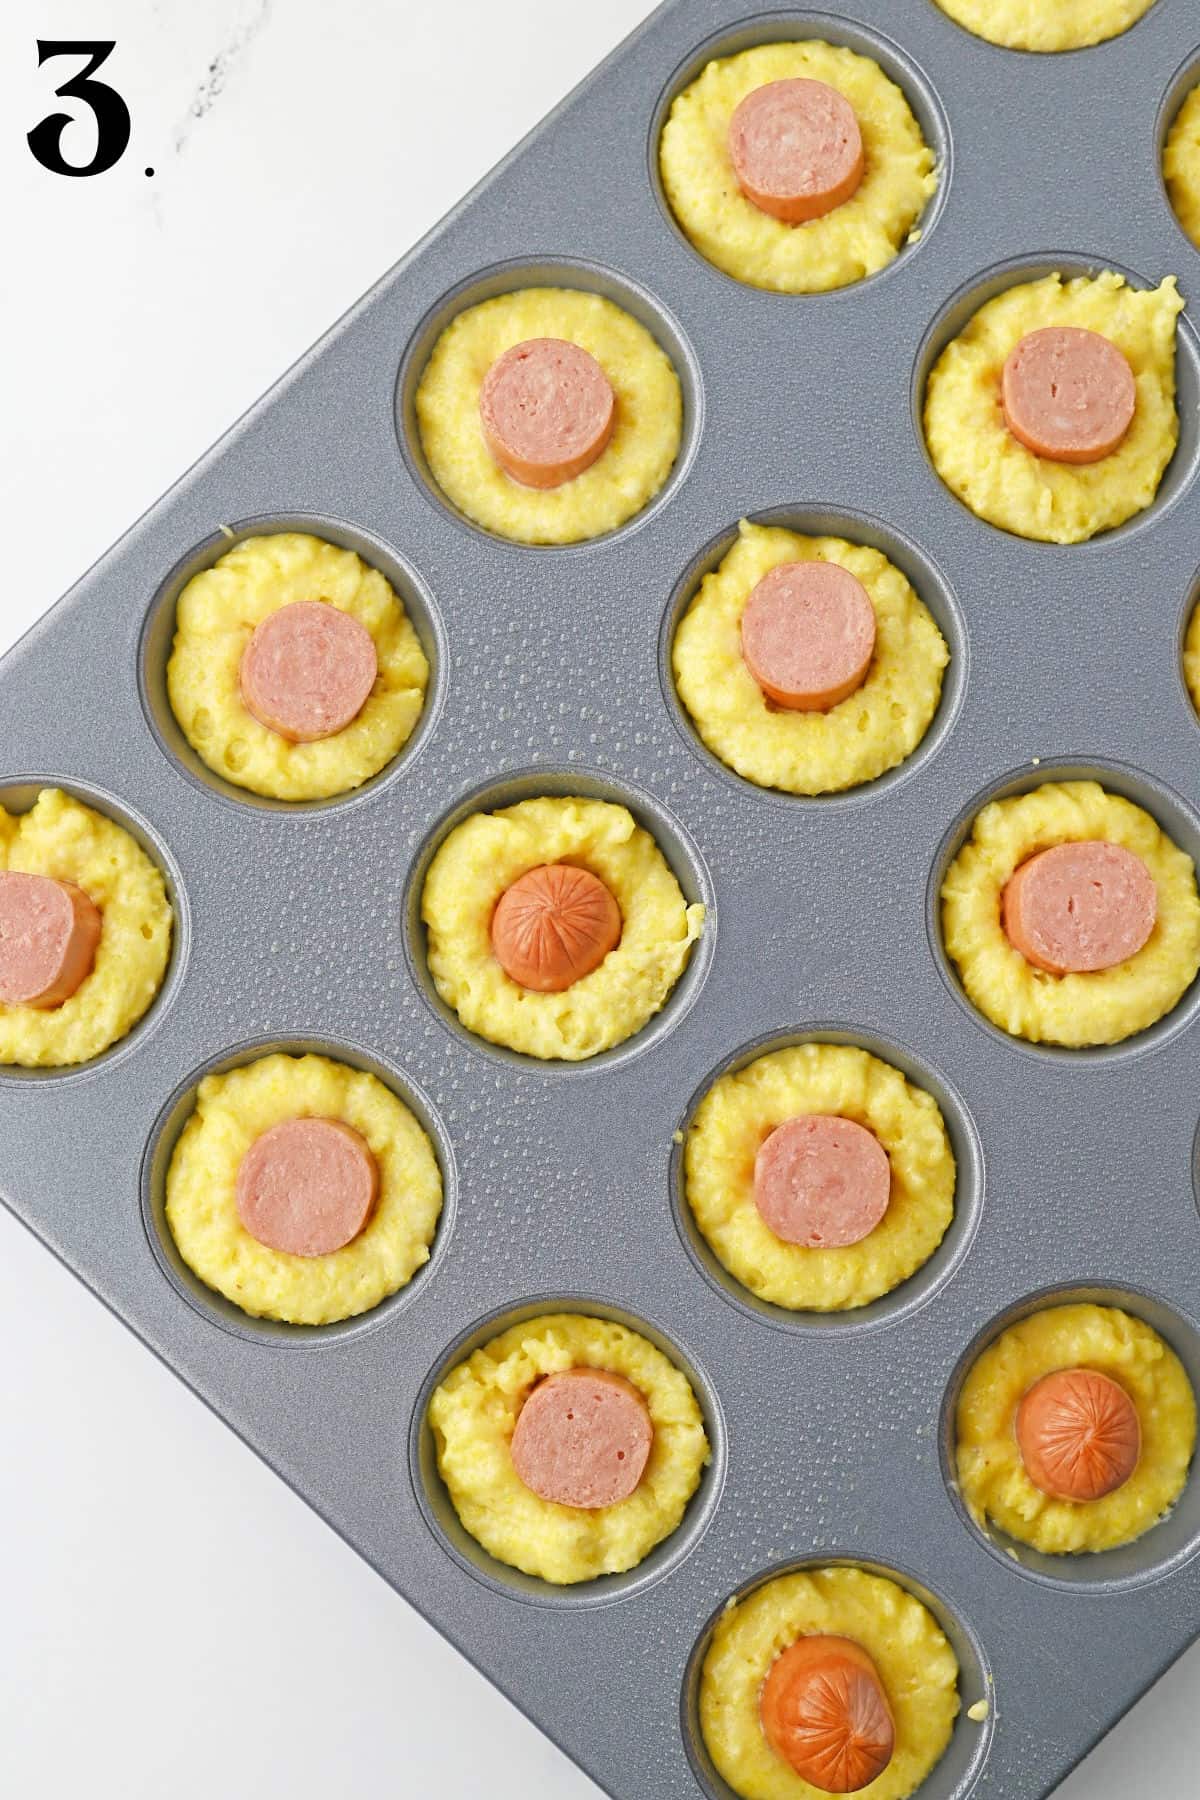 how to make Easy Corndog Bites - step 3 - mini corndogs ready to bake.